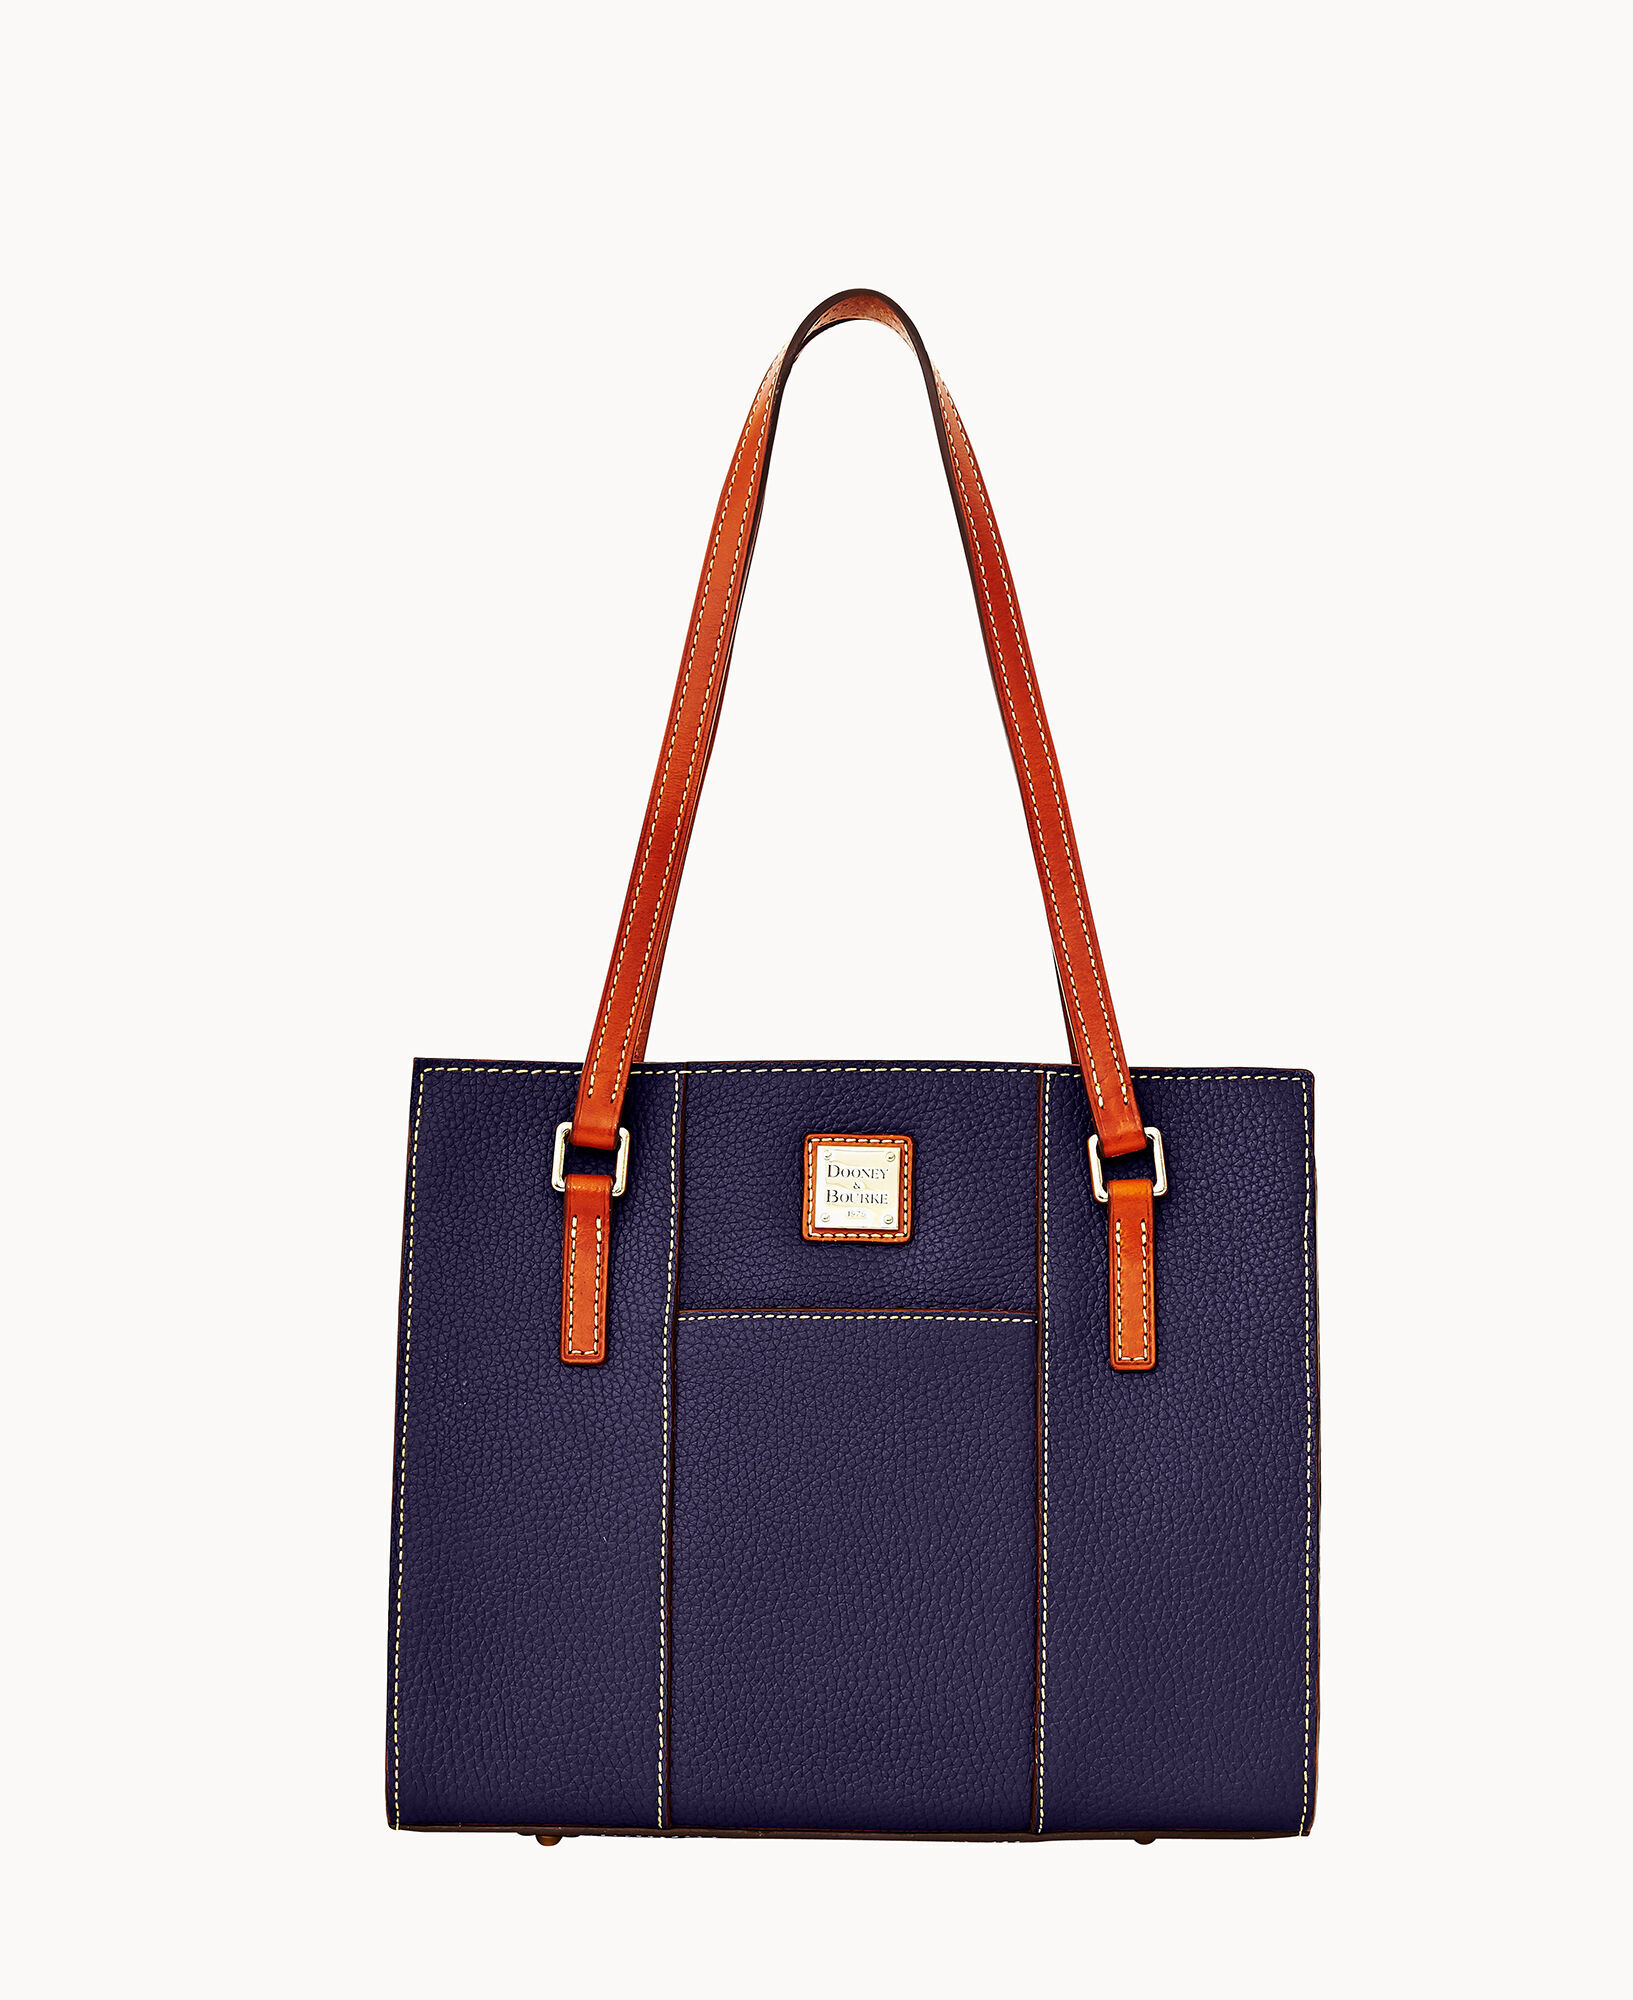 Dooney & Bourke Women's Bag - Blue